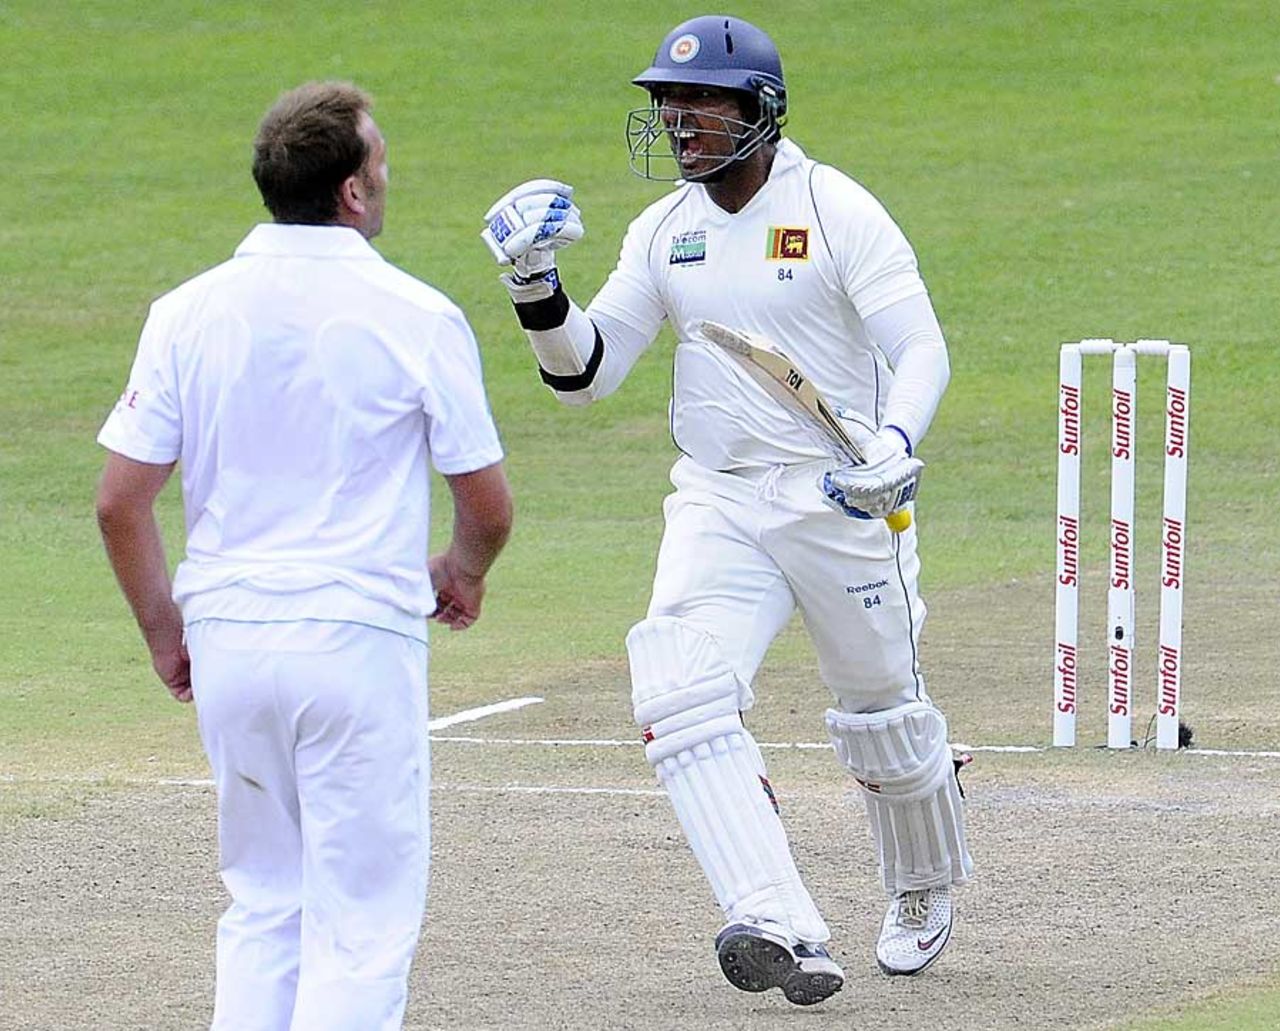 Kumar Sangakkara celebrates his first century in South Africa, South Africa v Sri Lanka, 2nd Test, Durban, 3rd day, December 28, 2011